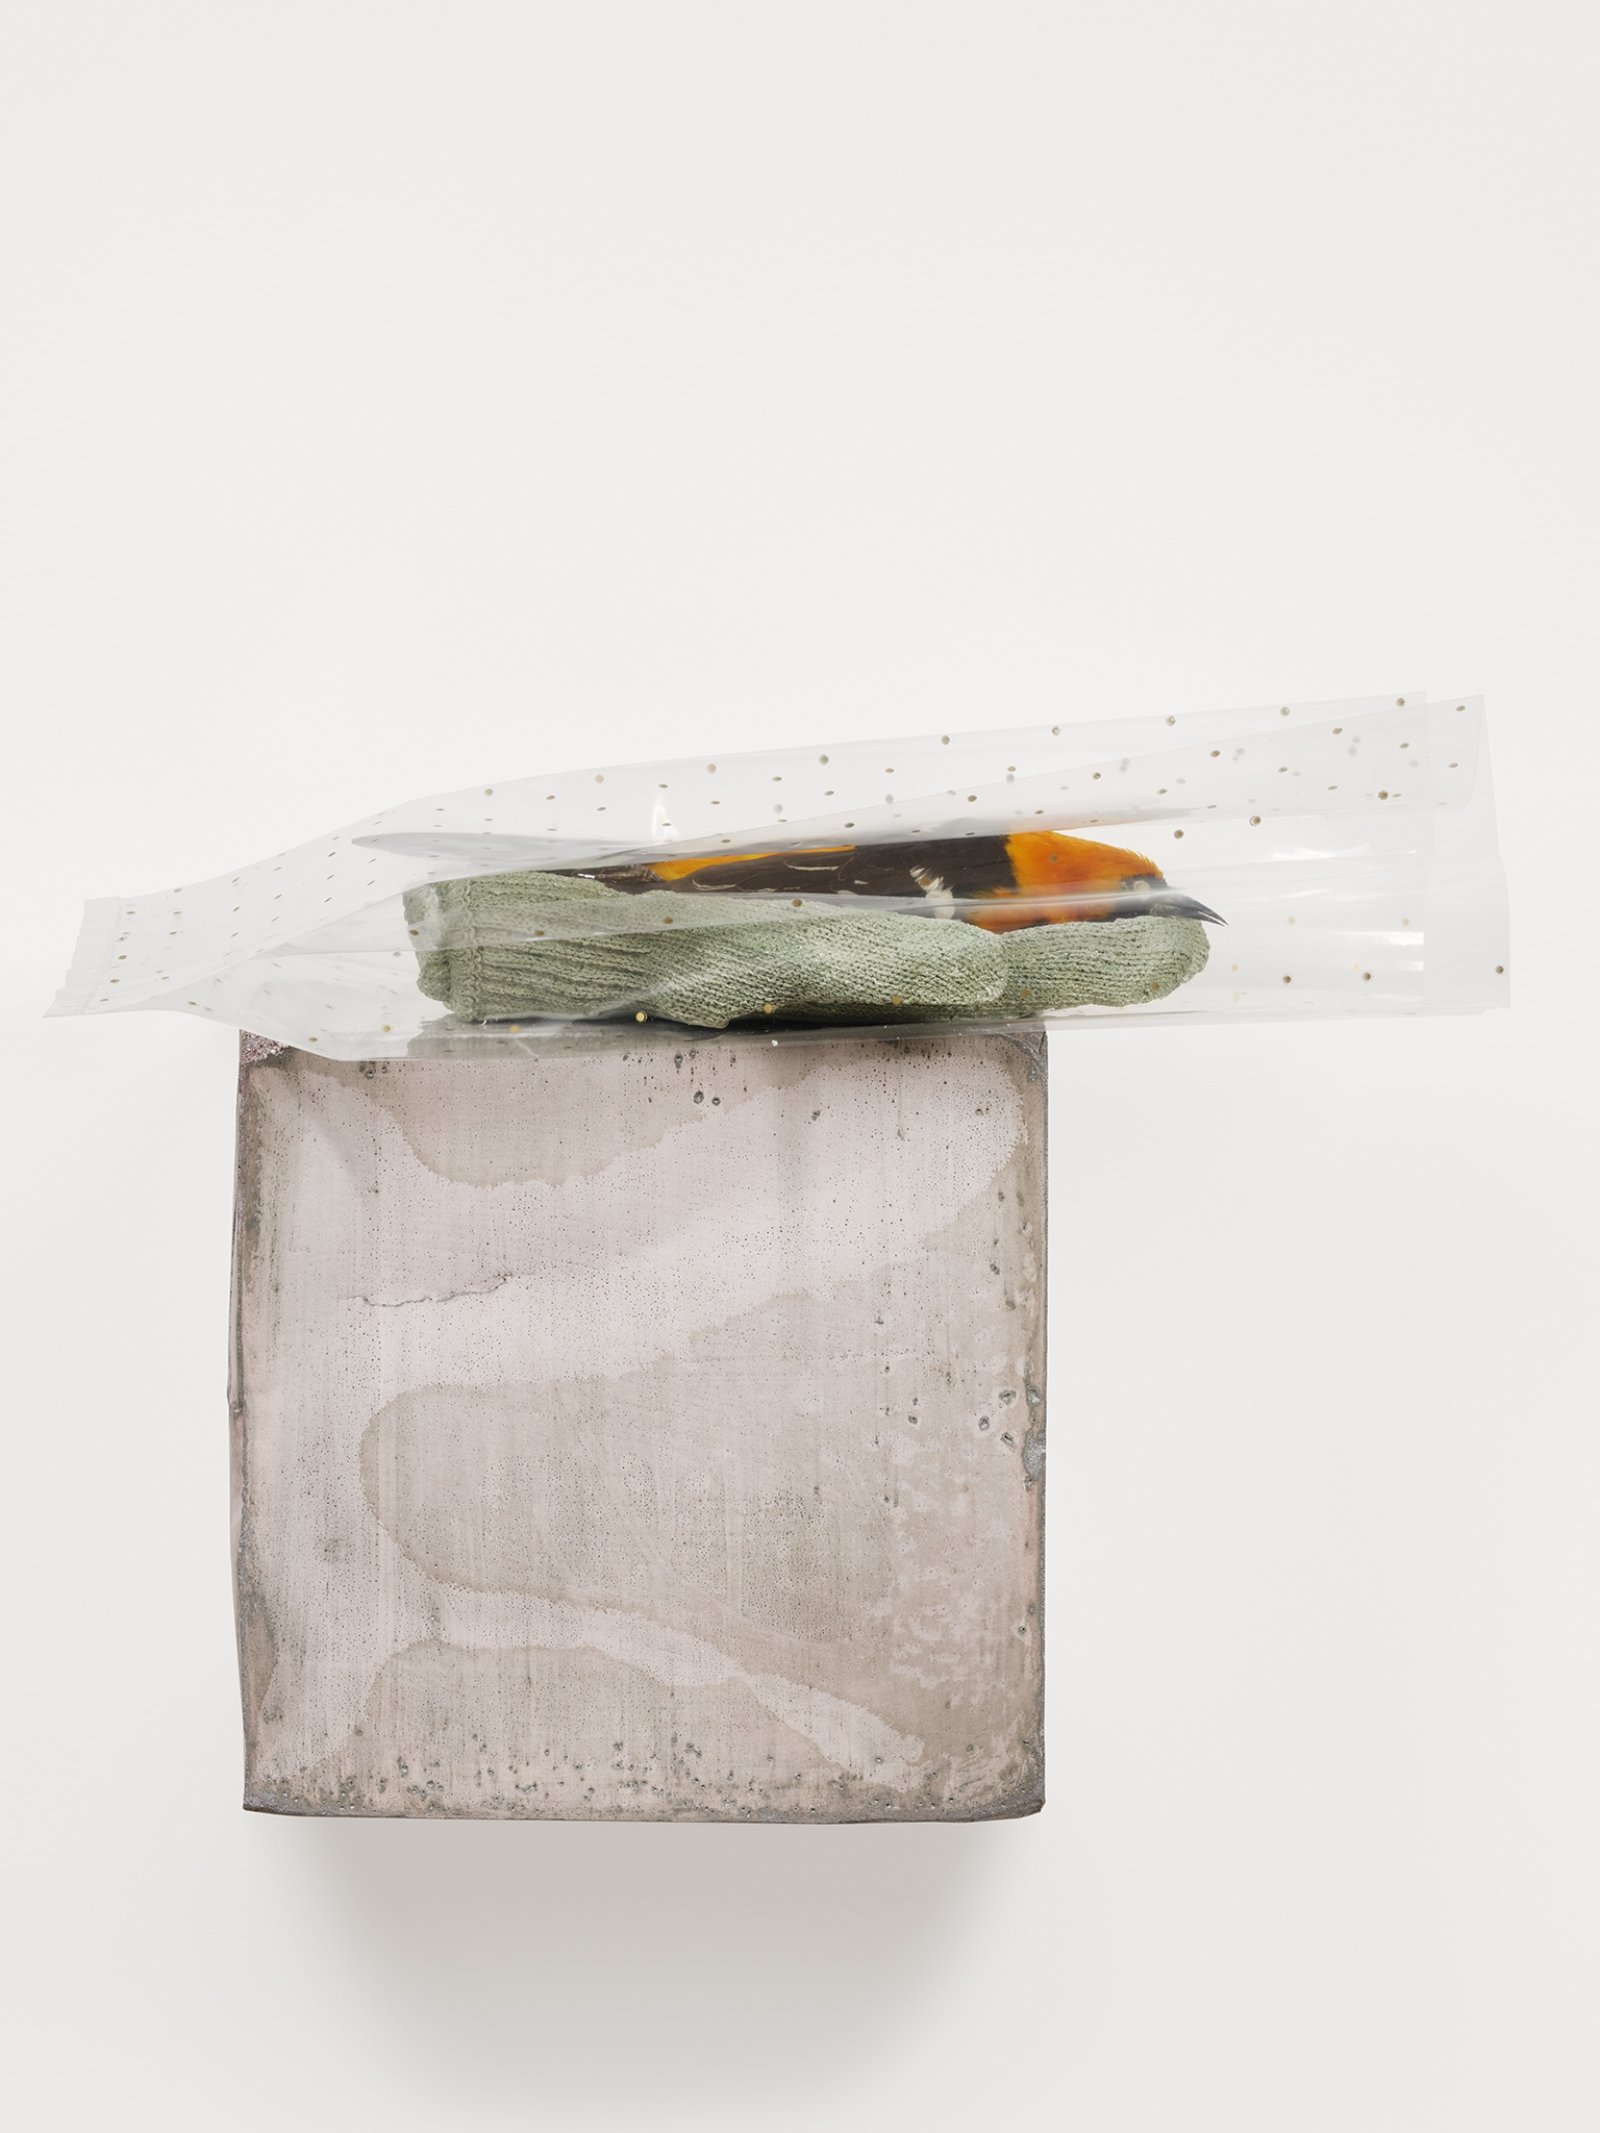 Liz Magor, Small Hand, 2019, polymerized gypsum, naturalized bird, cellophane, 10 x 12 x 6 in. (25 x 31 x 17 cm)